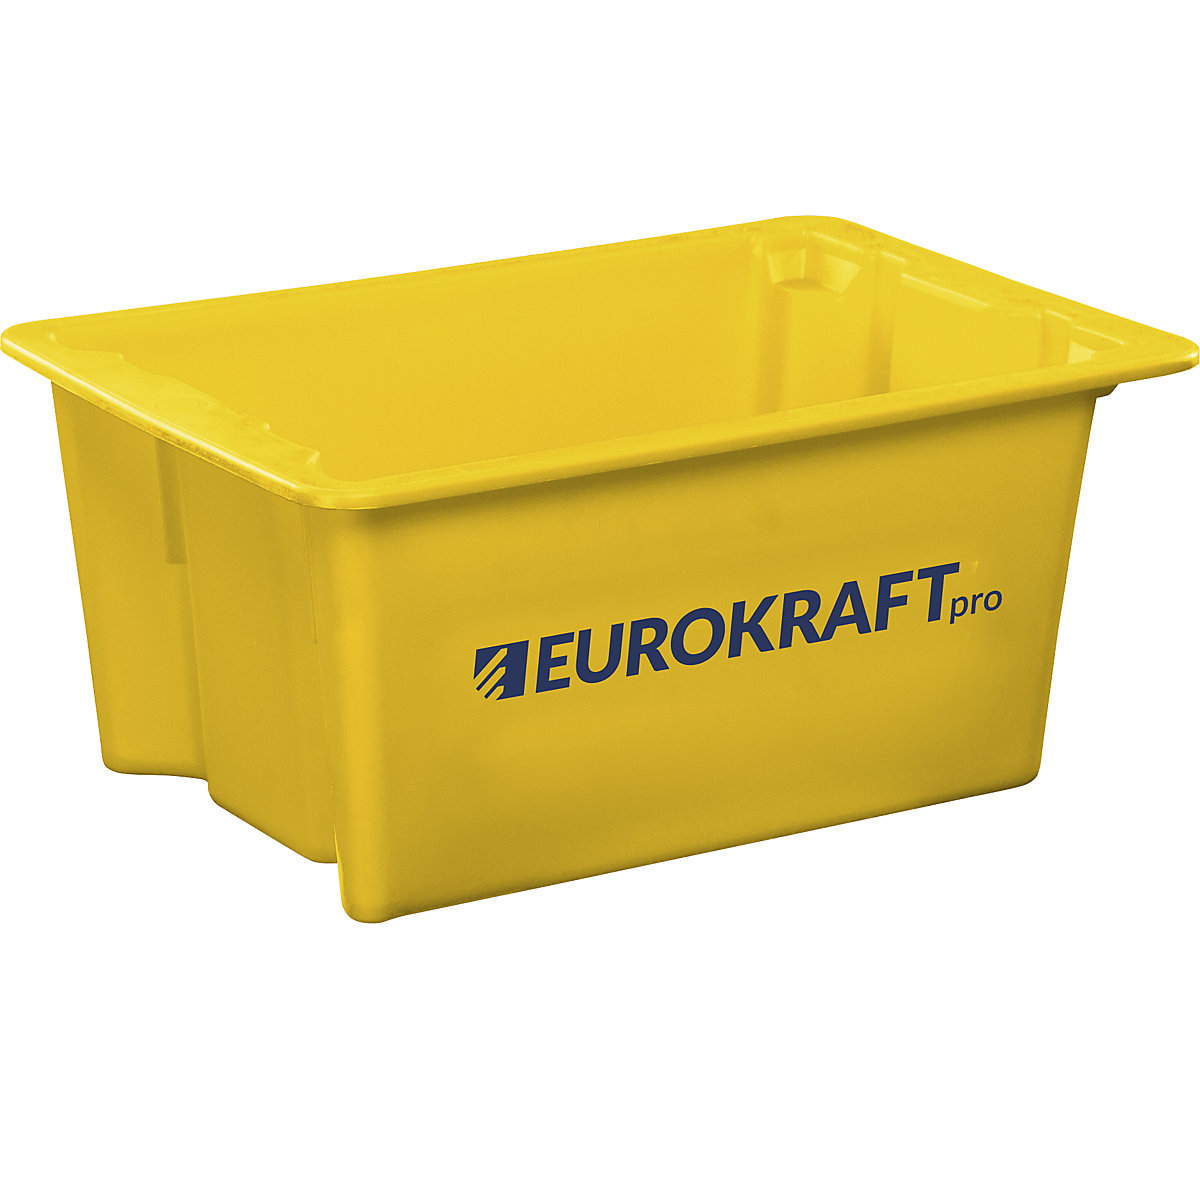 EUROKRAFTpro – Stack/nest container made of polypropylene suitable for foodstuffs